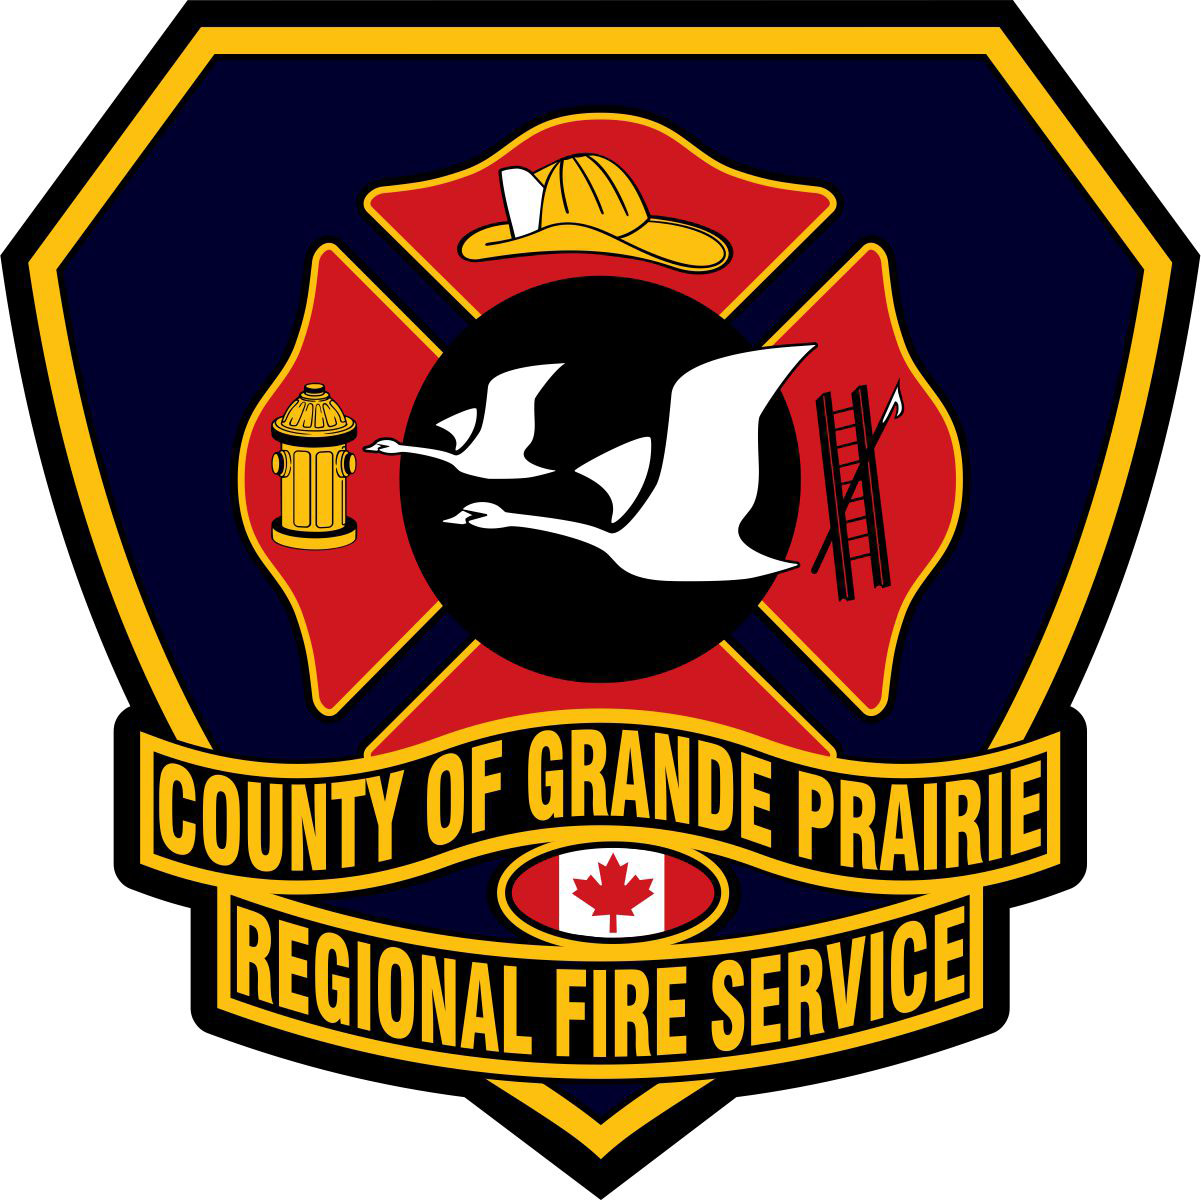 County of Grand Prairie Regional Fire Service Crest